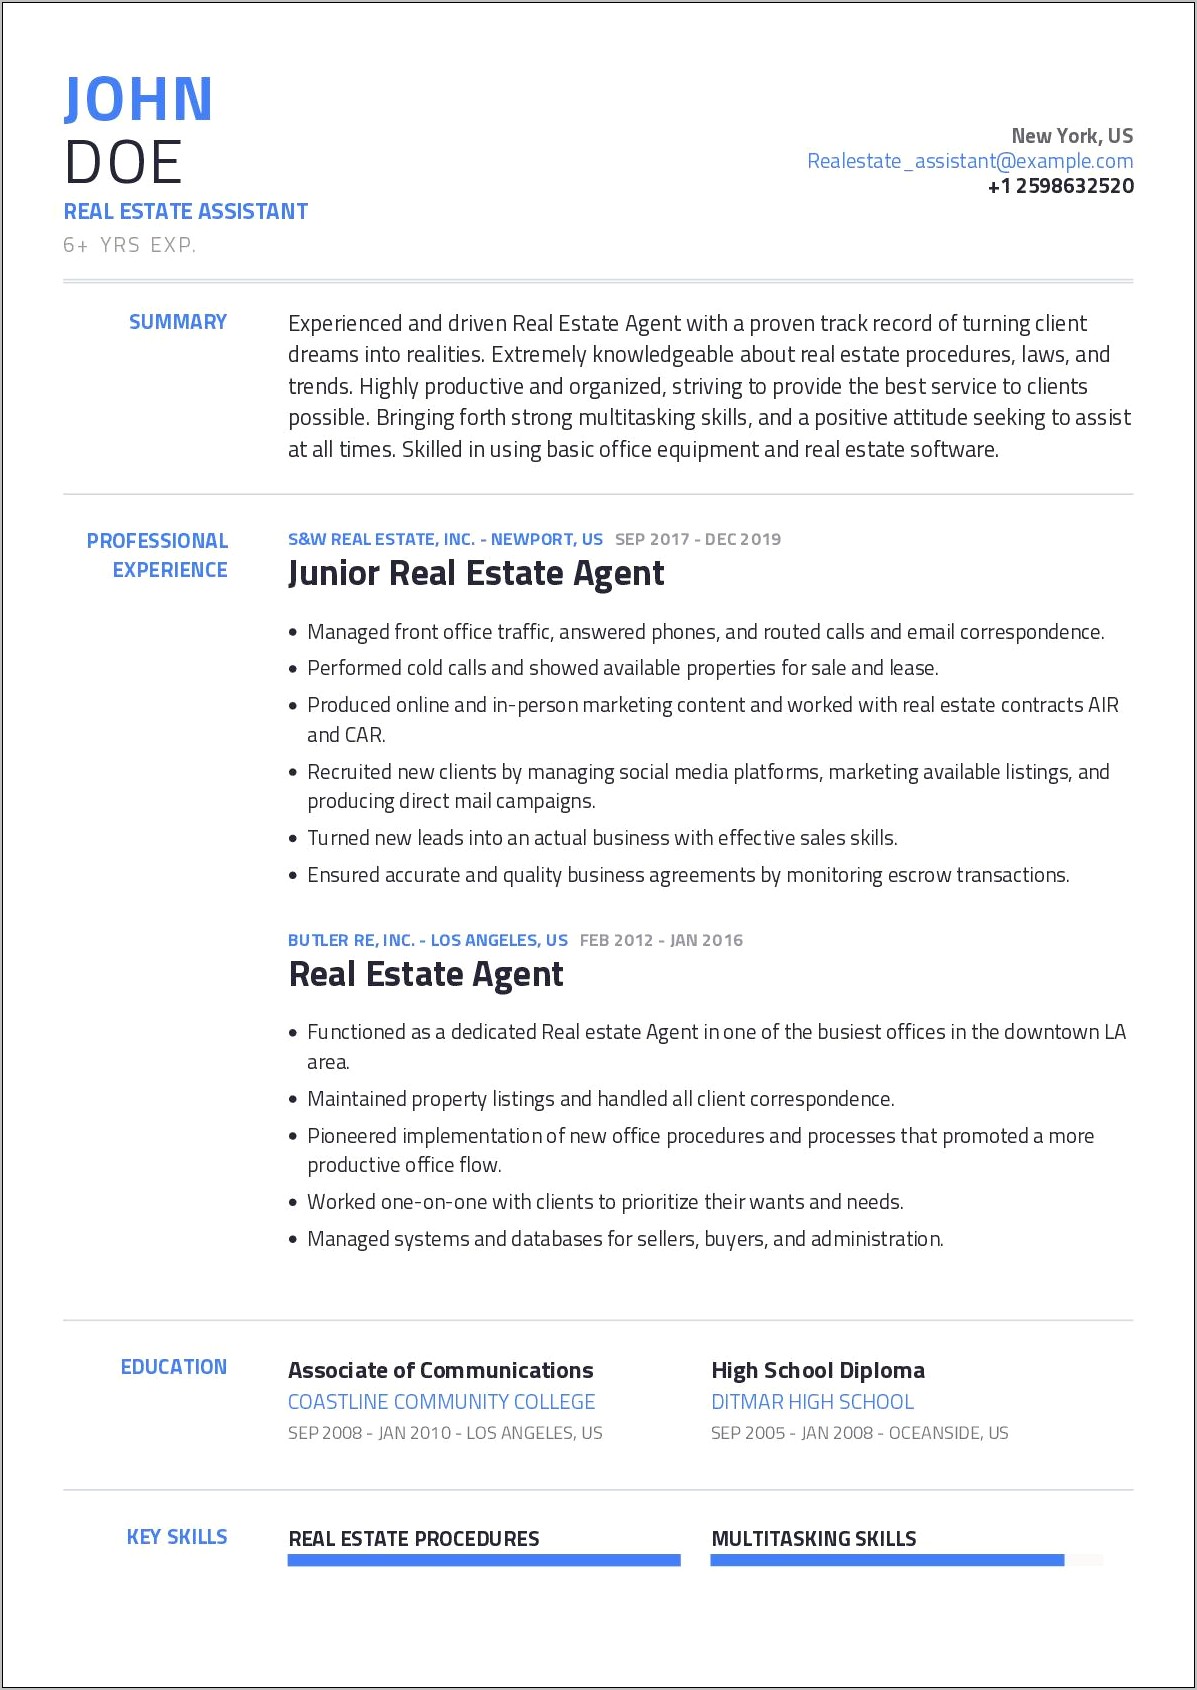 Description Of A Real Estate Agent For Resume